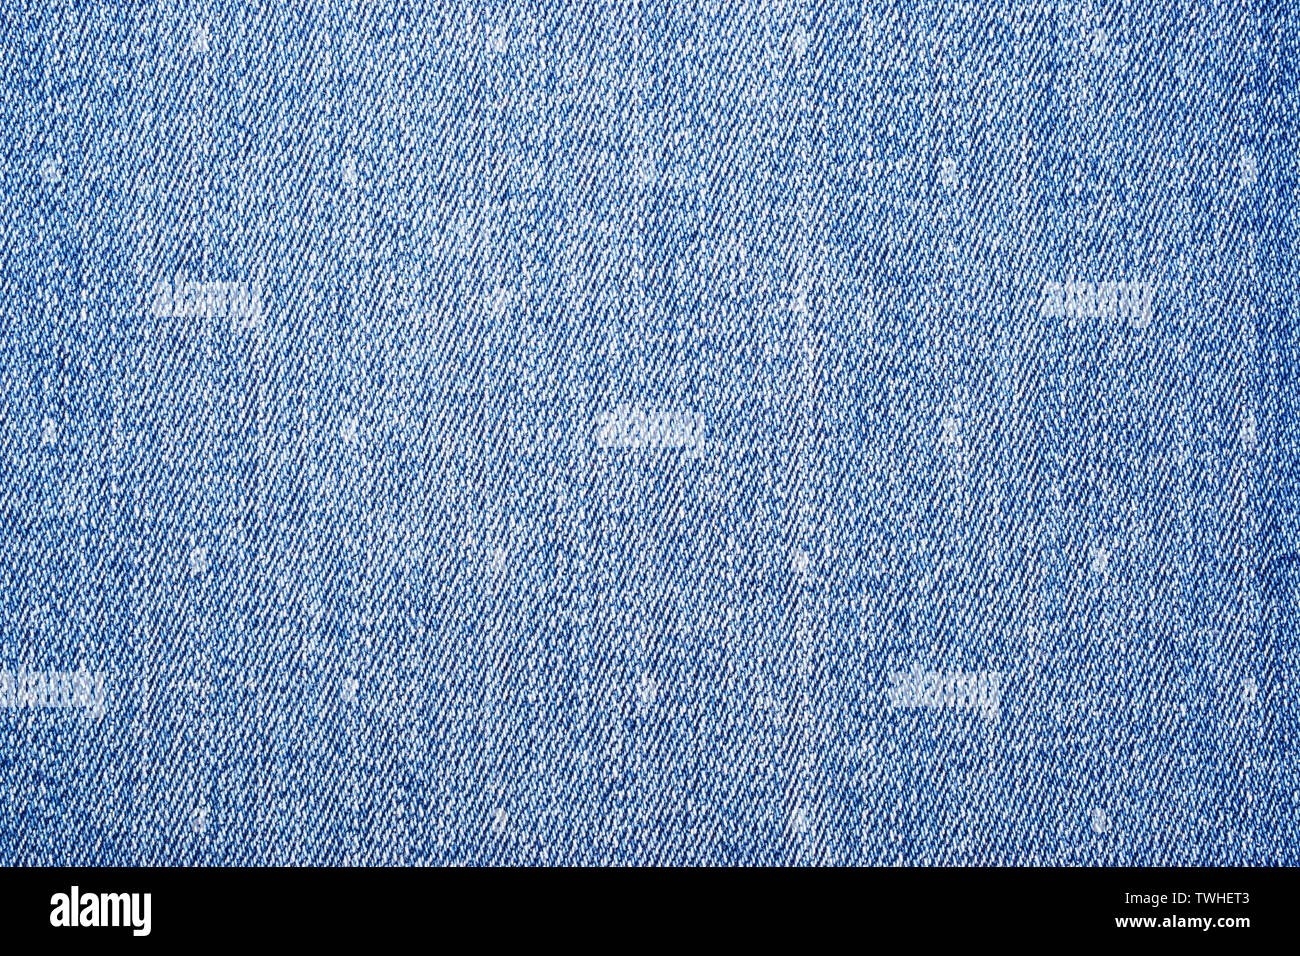 jeans denim texture background, denim jeans background, jeans texture Stock Photo